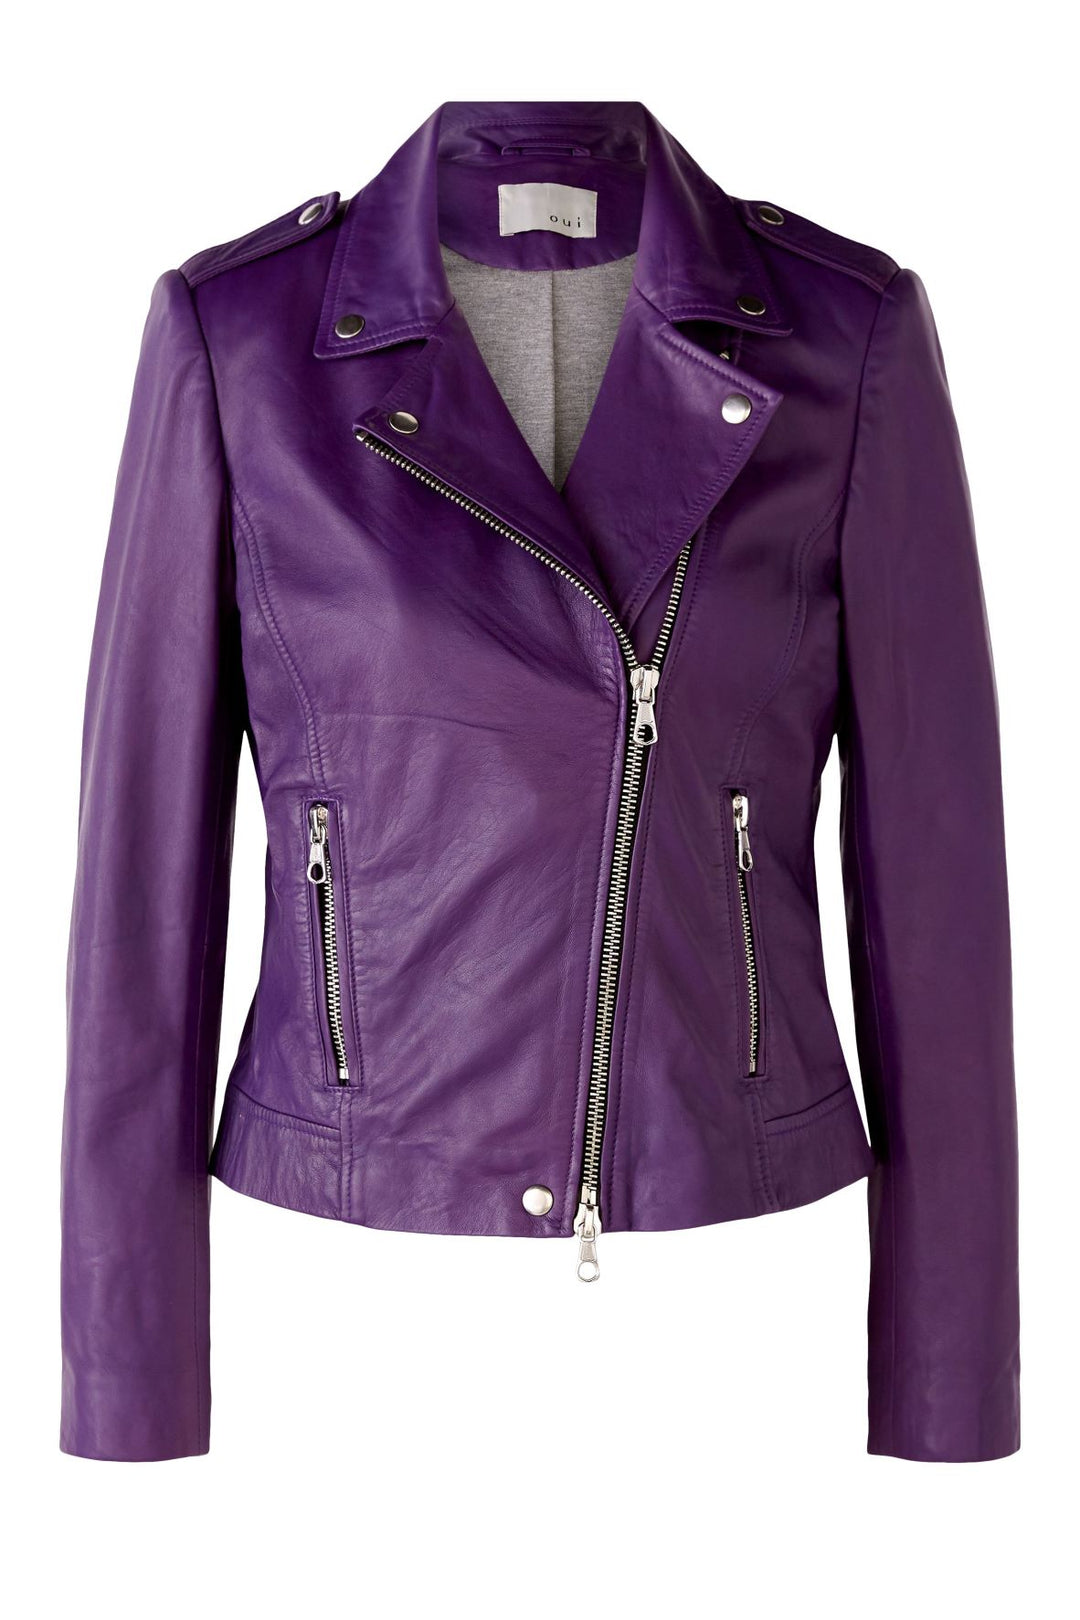 Oui 76138  Leather Jacket dotique purple leather jacket biker style